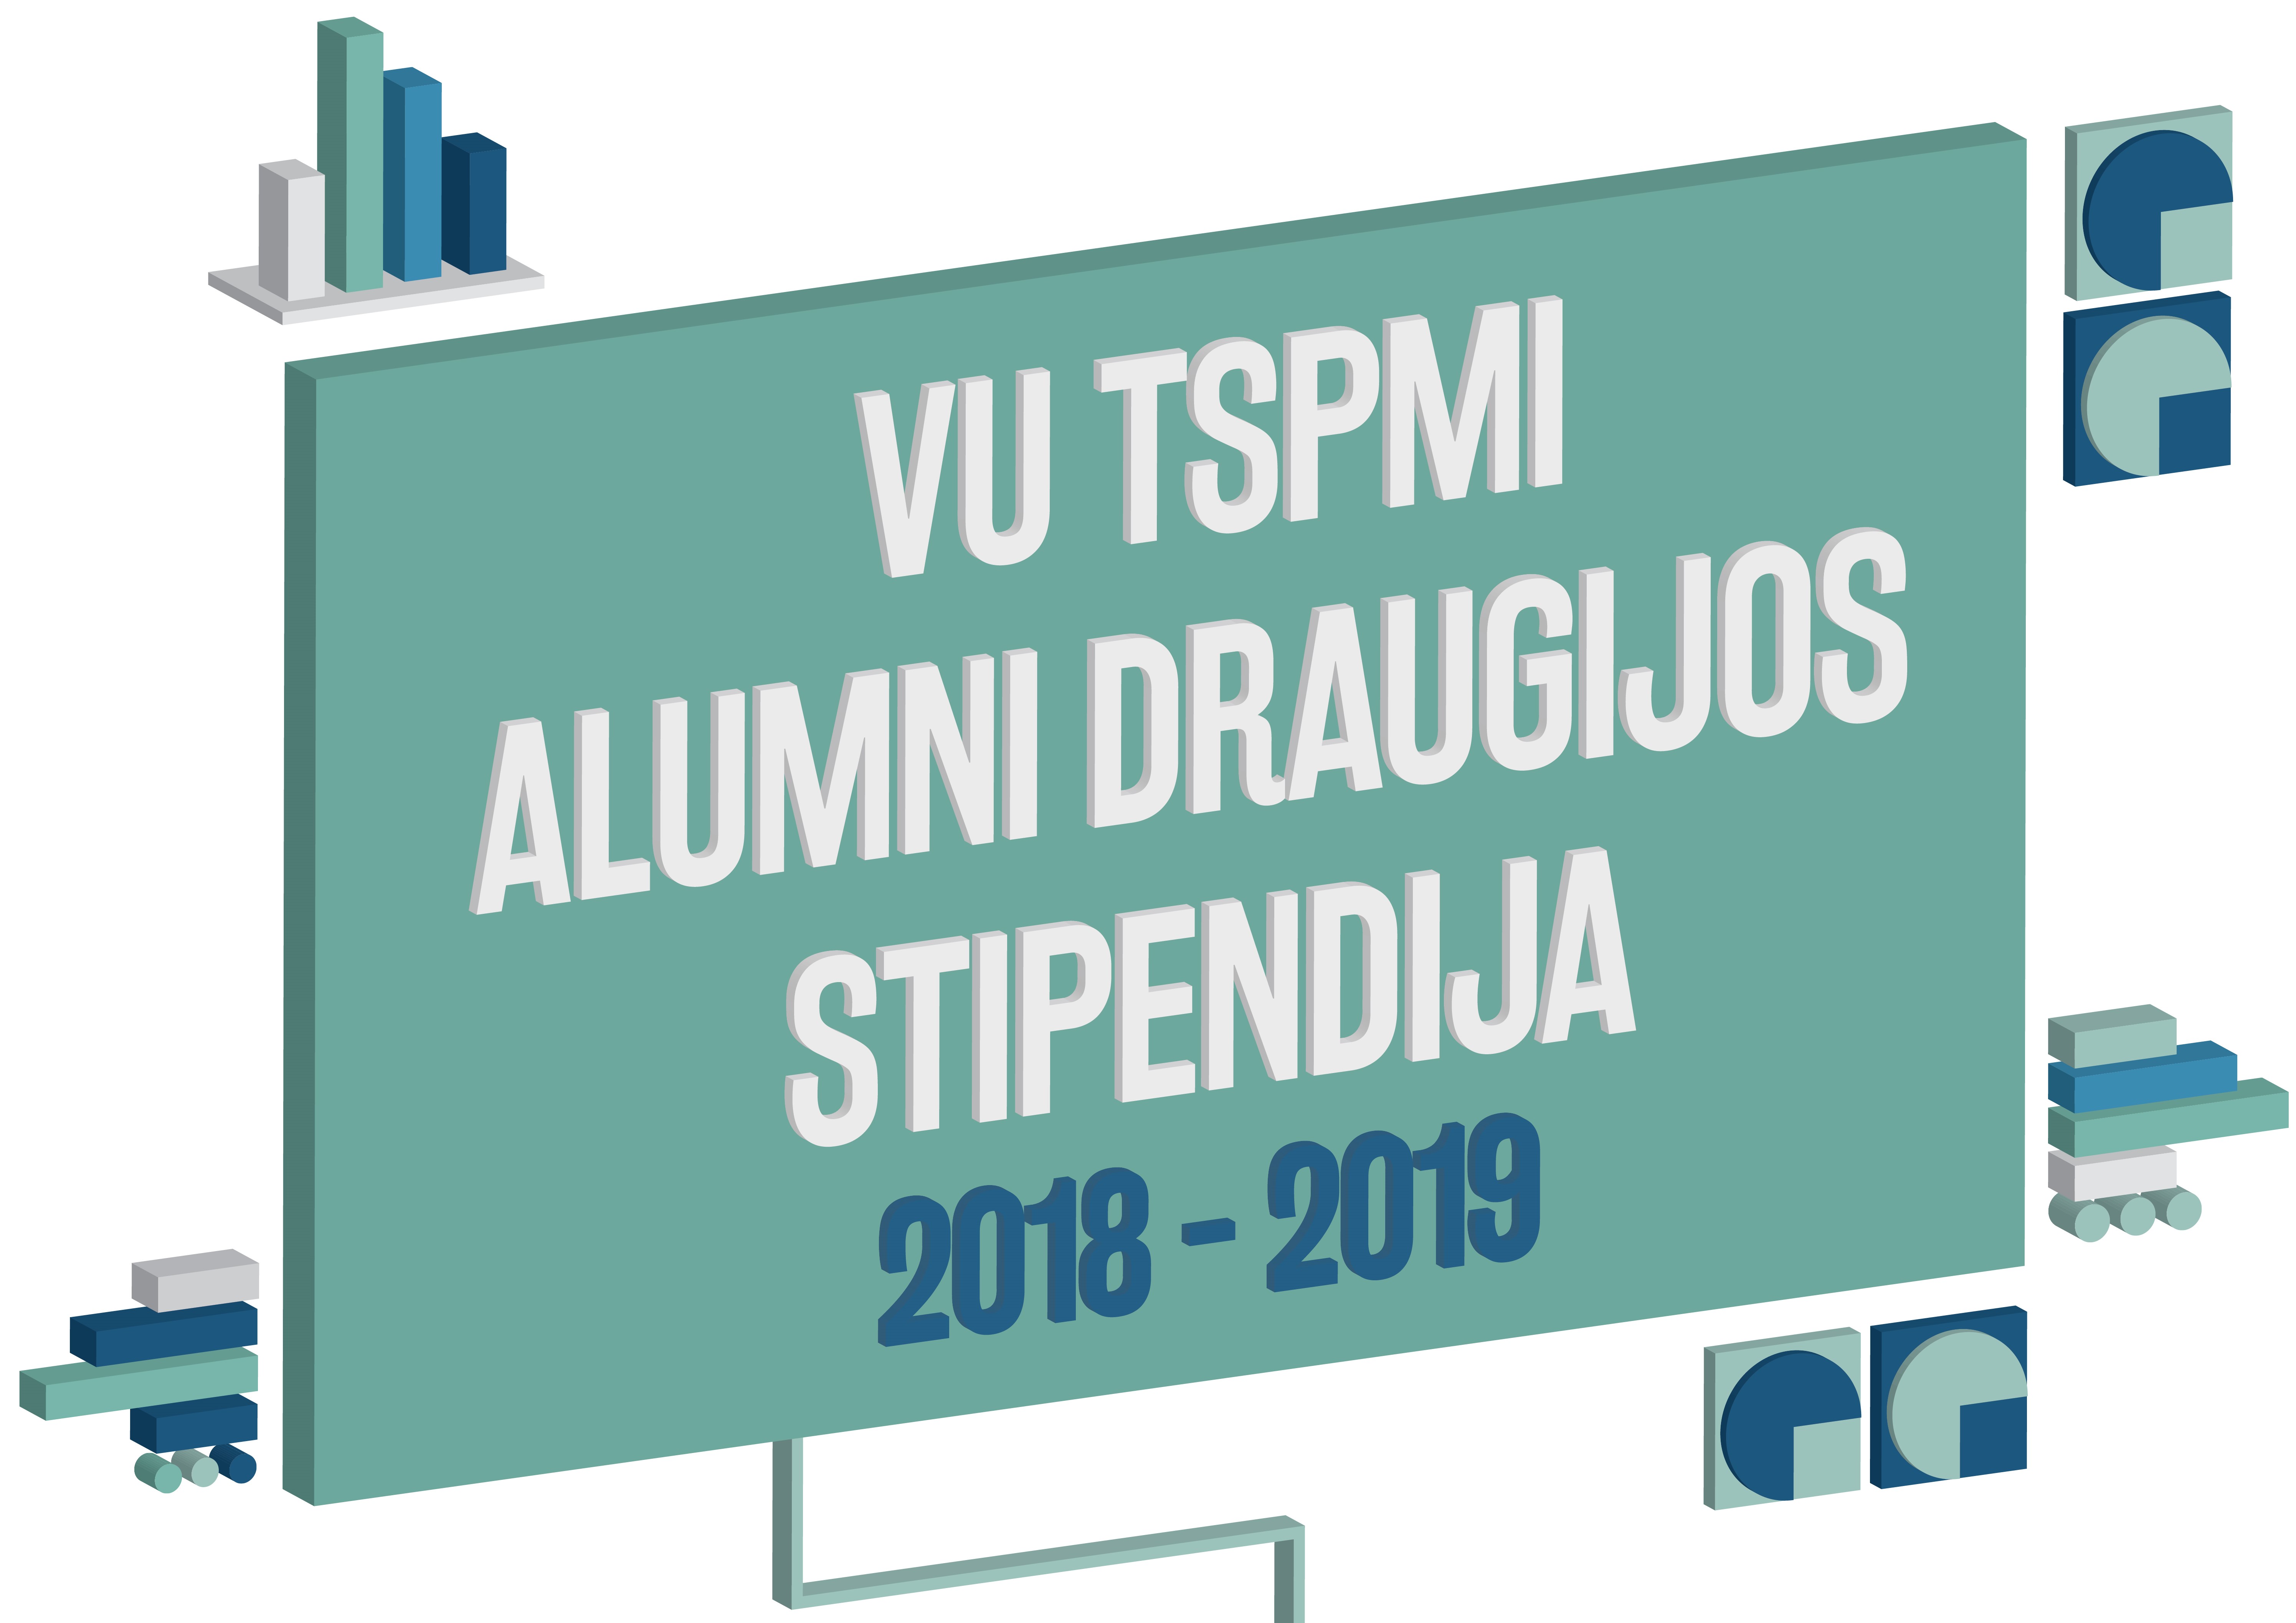 VU TSPMI Alumni draugijos stipendija 2018-2019 m.m.